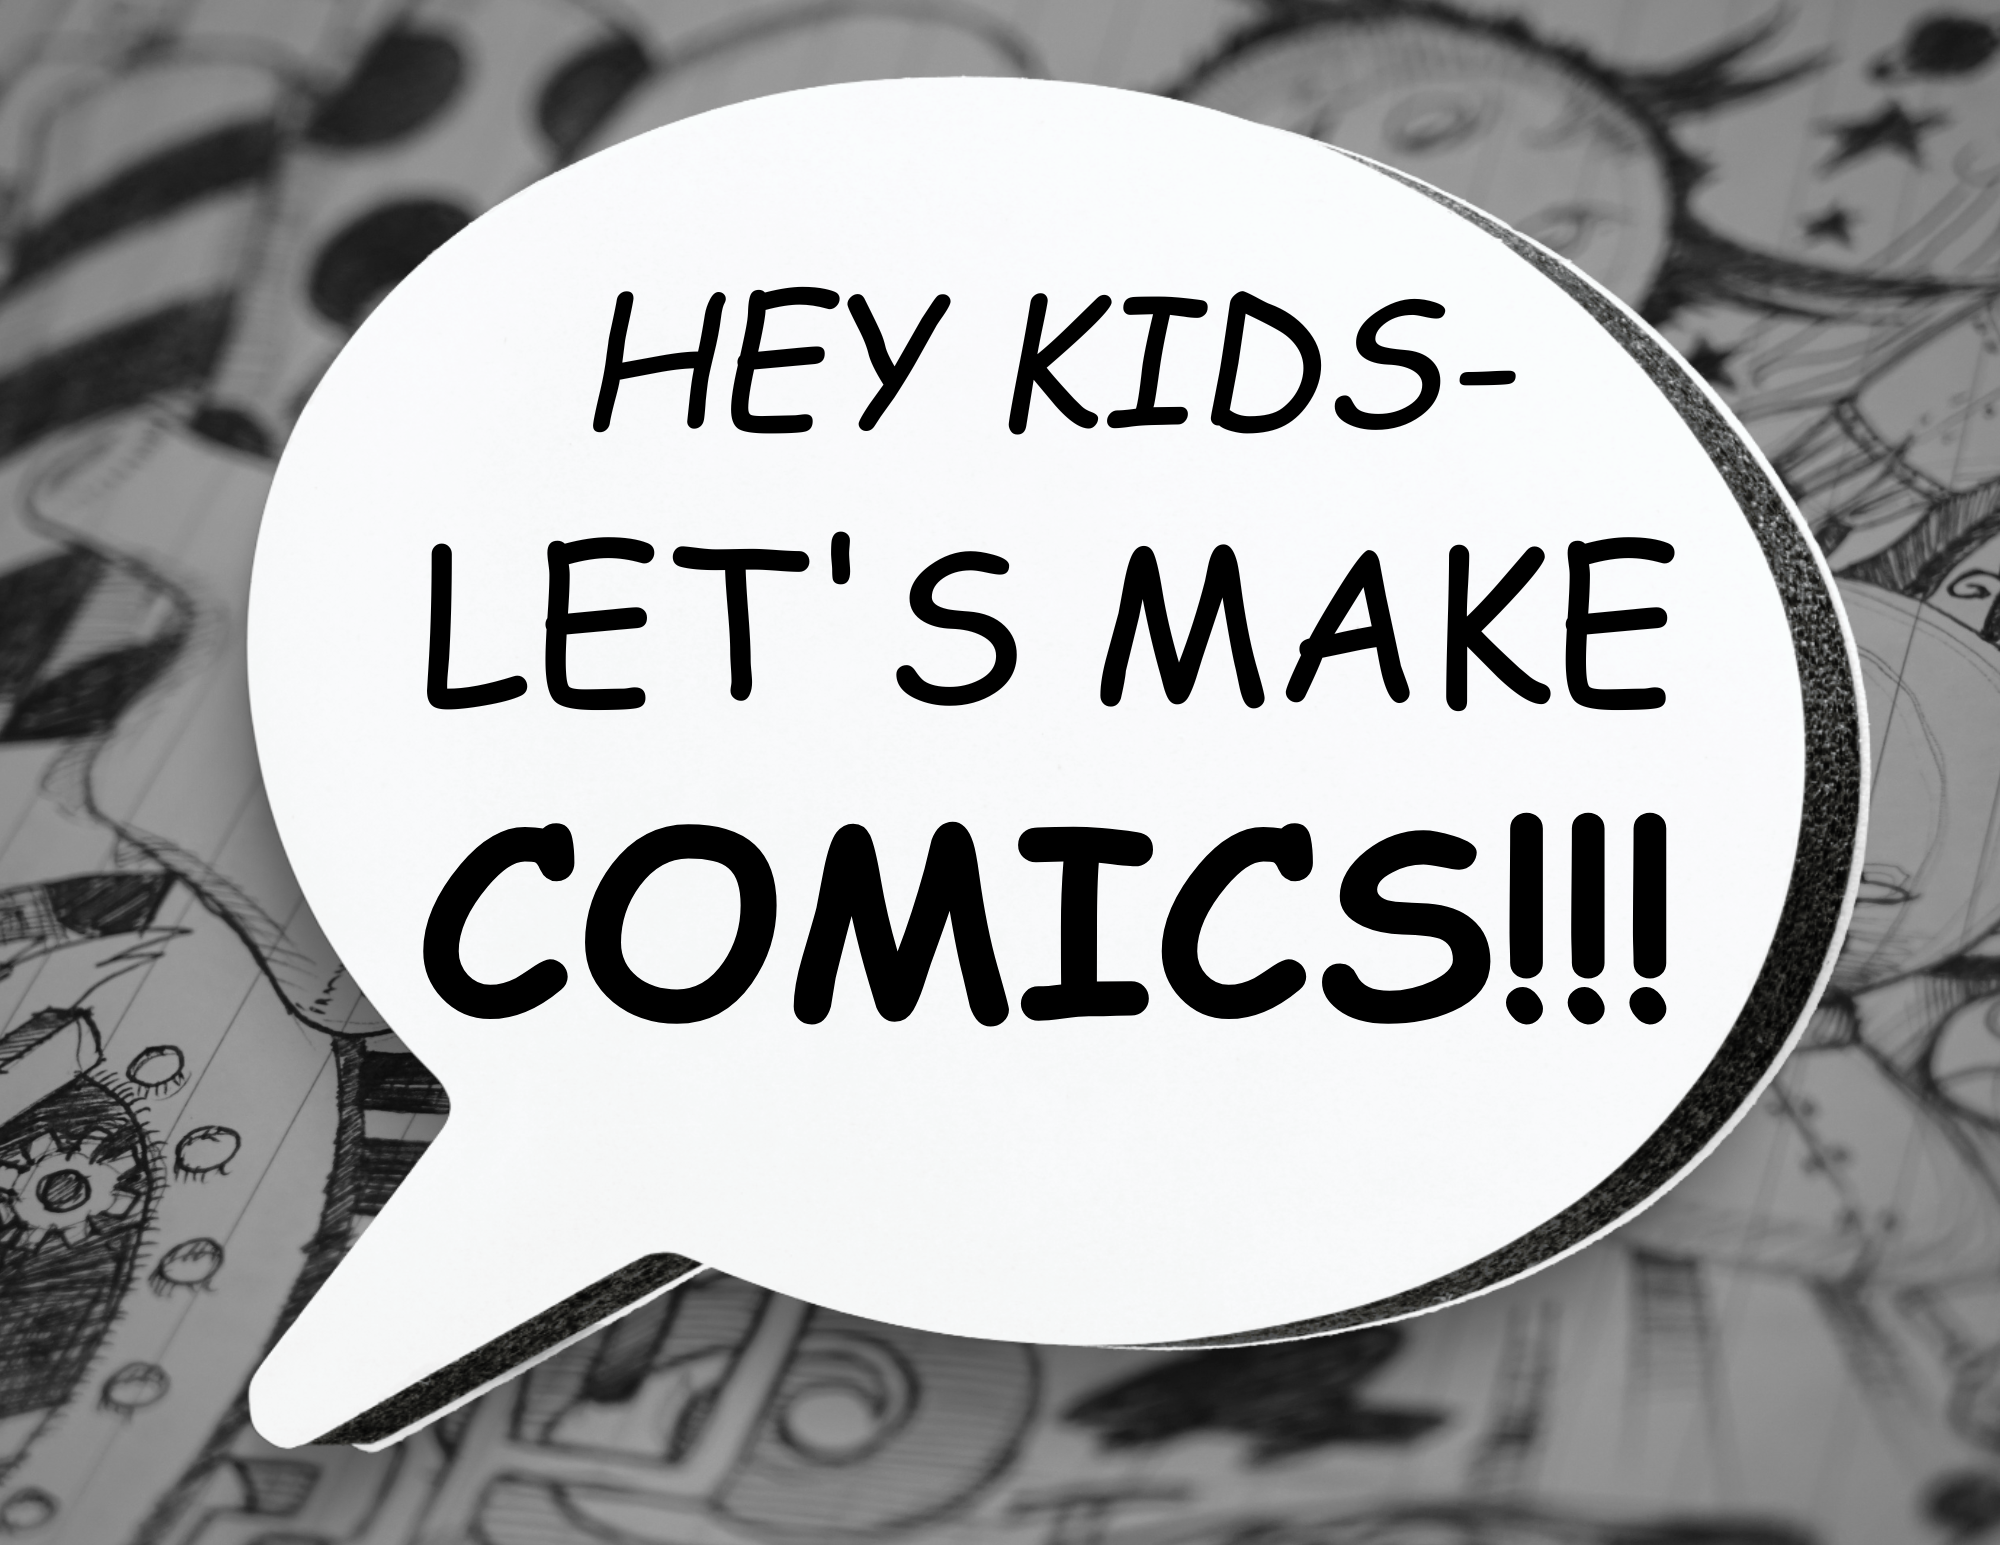 A speech bubble is overlaying comic artwork. The speech bubble reads, "Hey kids, let's make comics!"